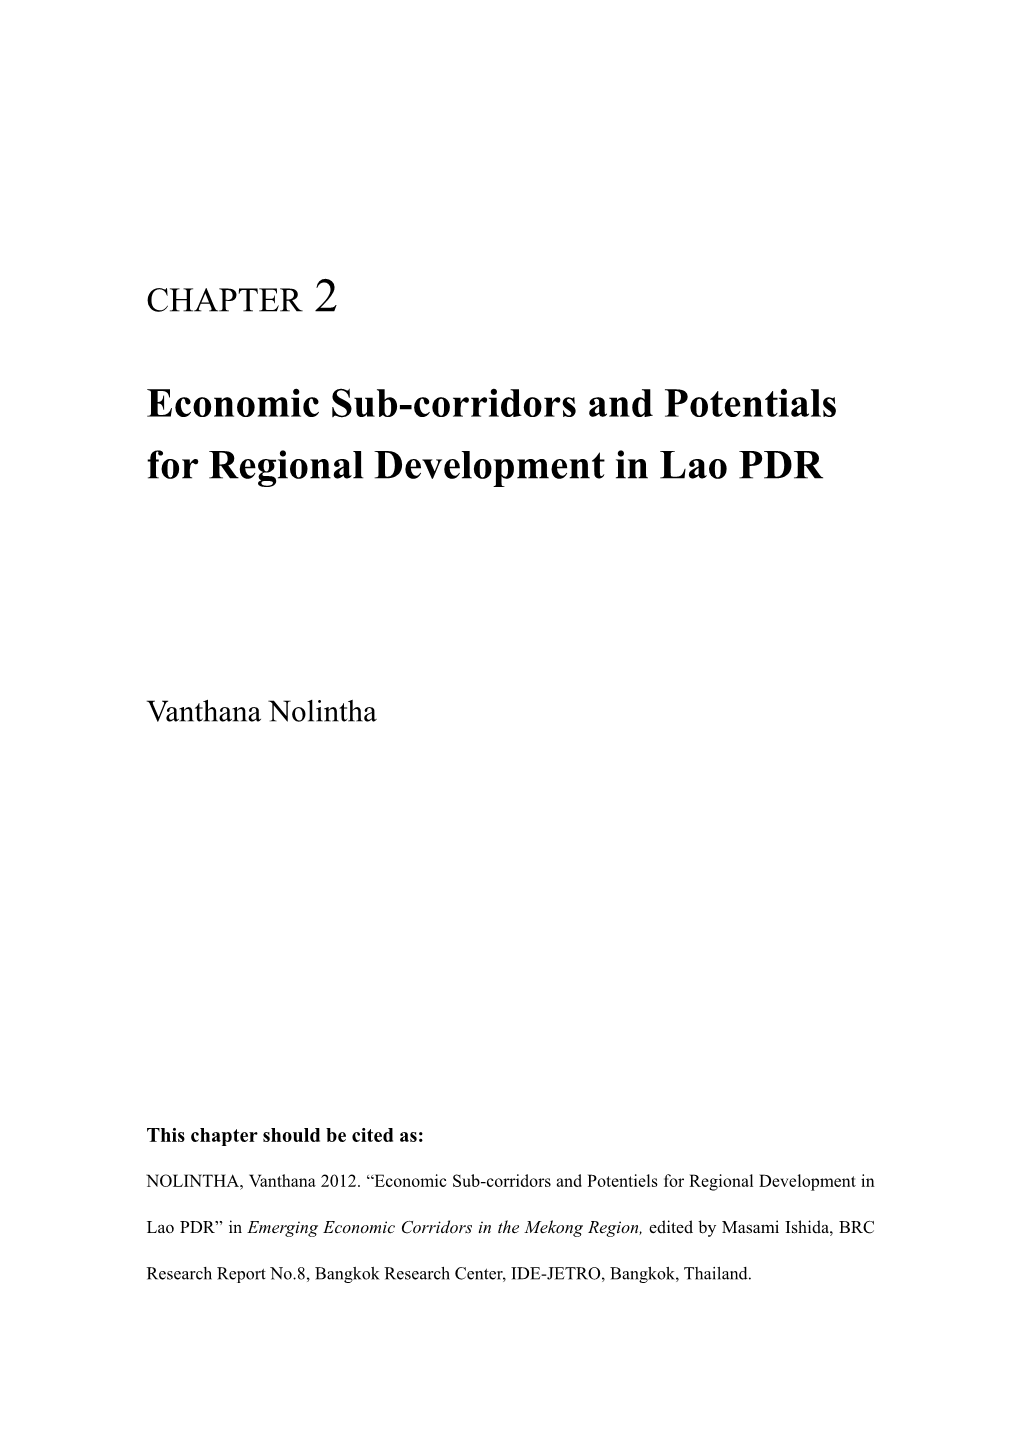 Economic Sub-Corridors and Potentials for Regional Development in Lao PDR